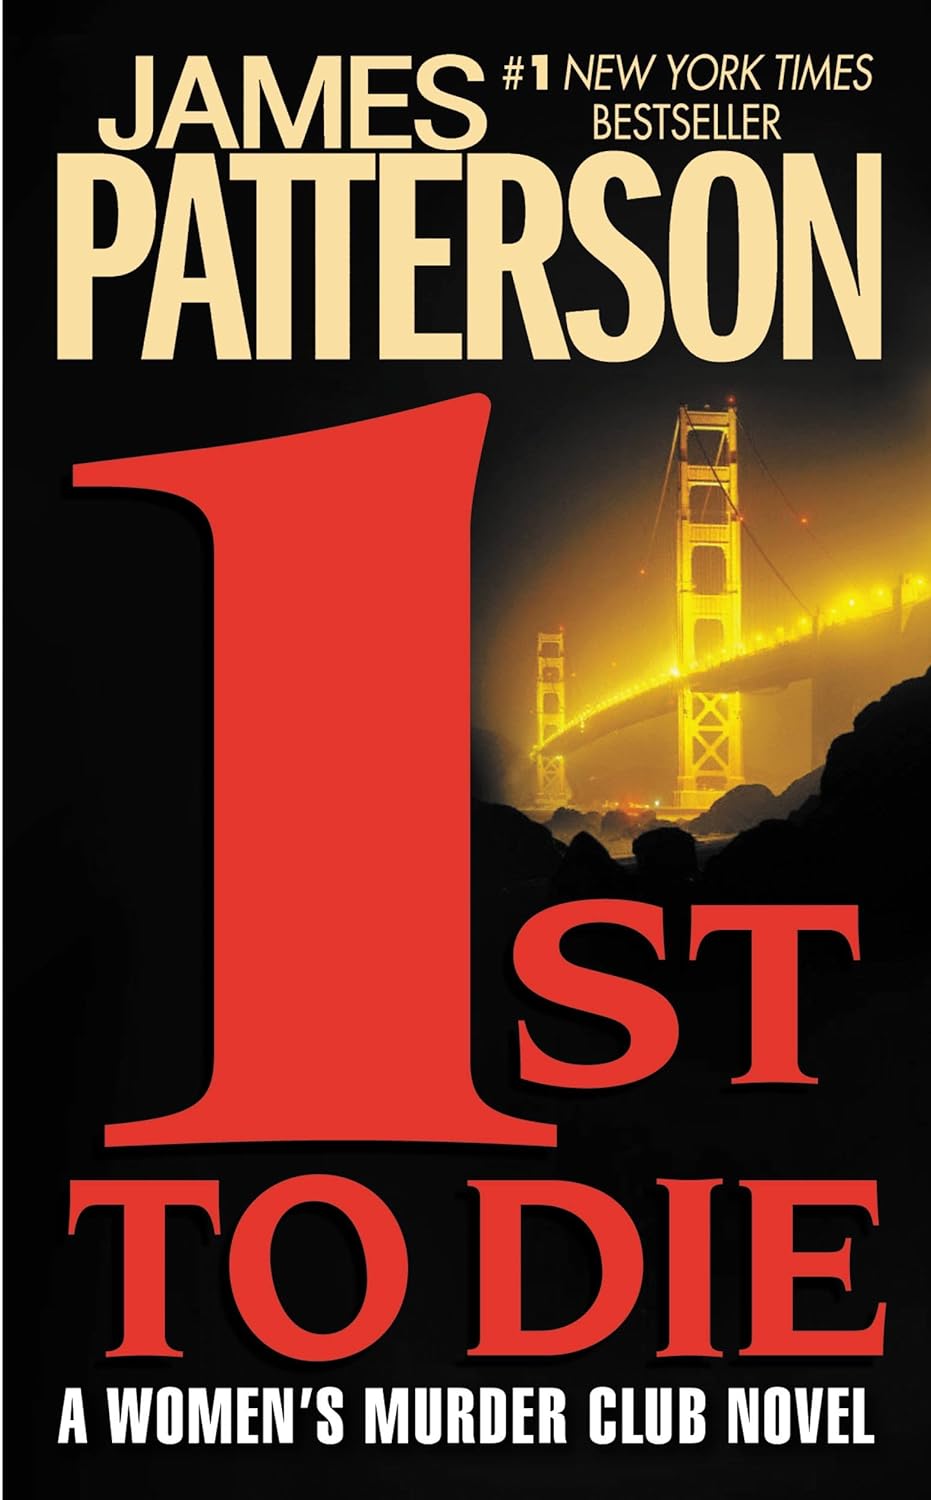 Jameson's Patterson 1st to Die